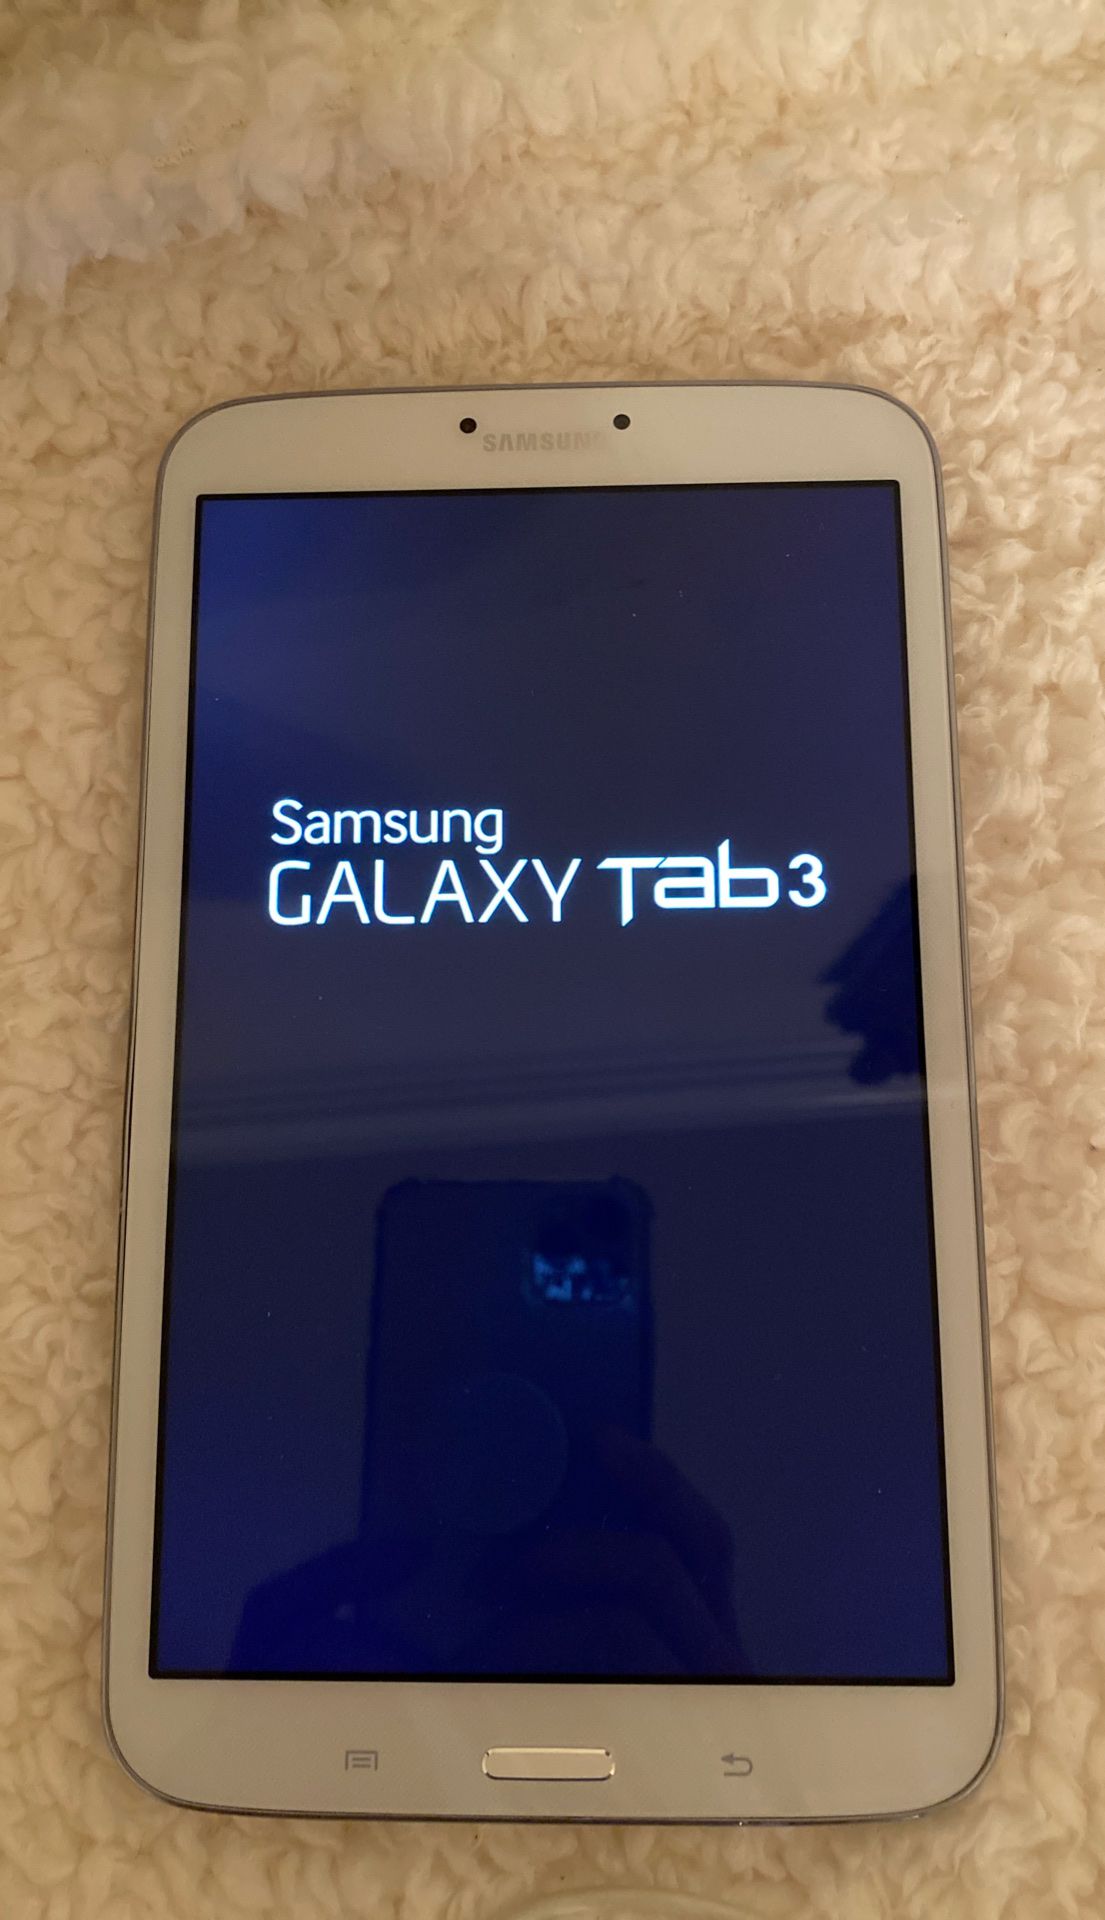 Samsung galaxy 3. Electronic pad. WiFi 16 GB. Protective sticker still intact